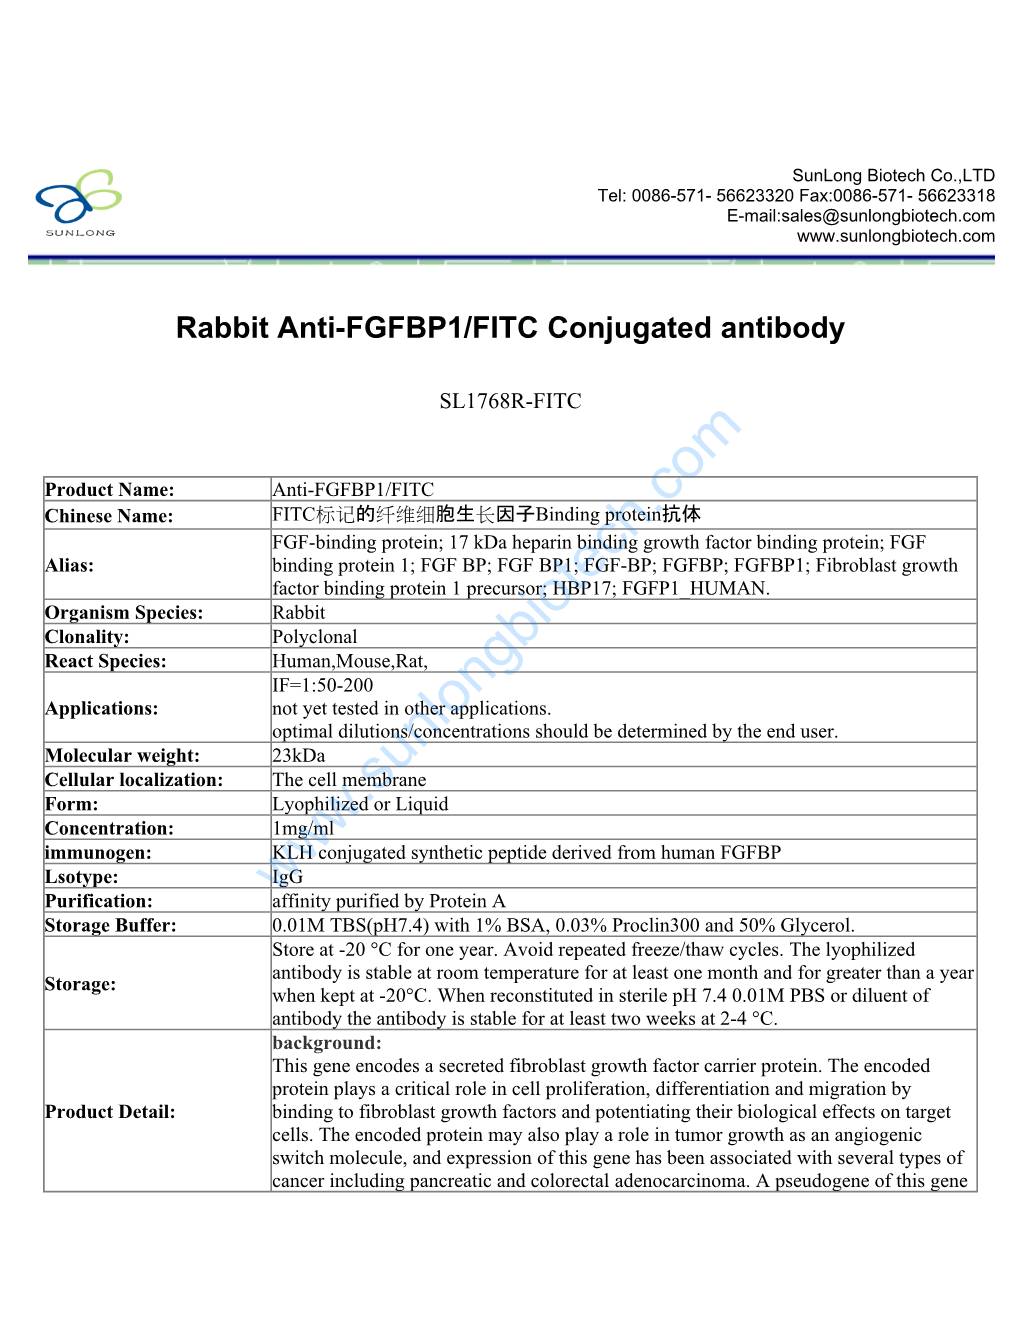 Rabbit Anti-FGFBP1/FITC Conjugated Antibody